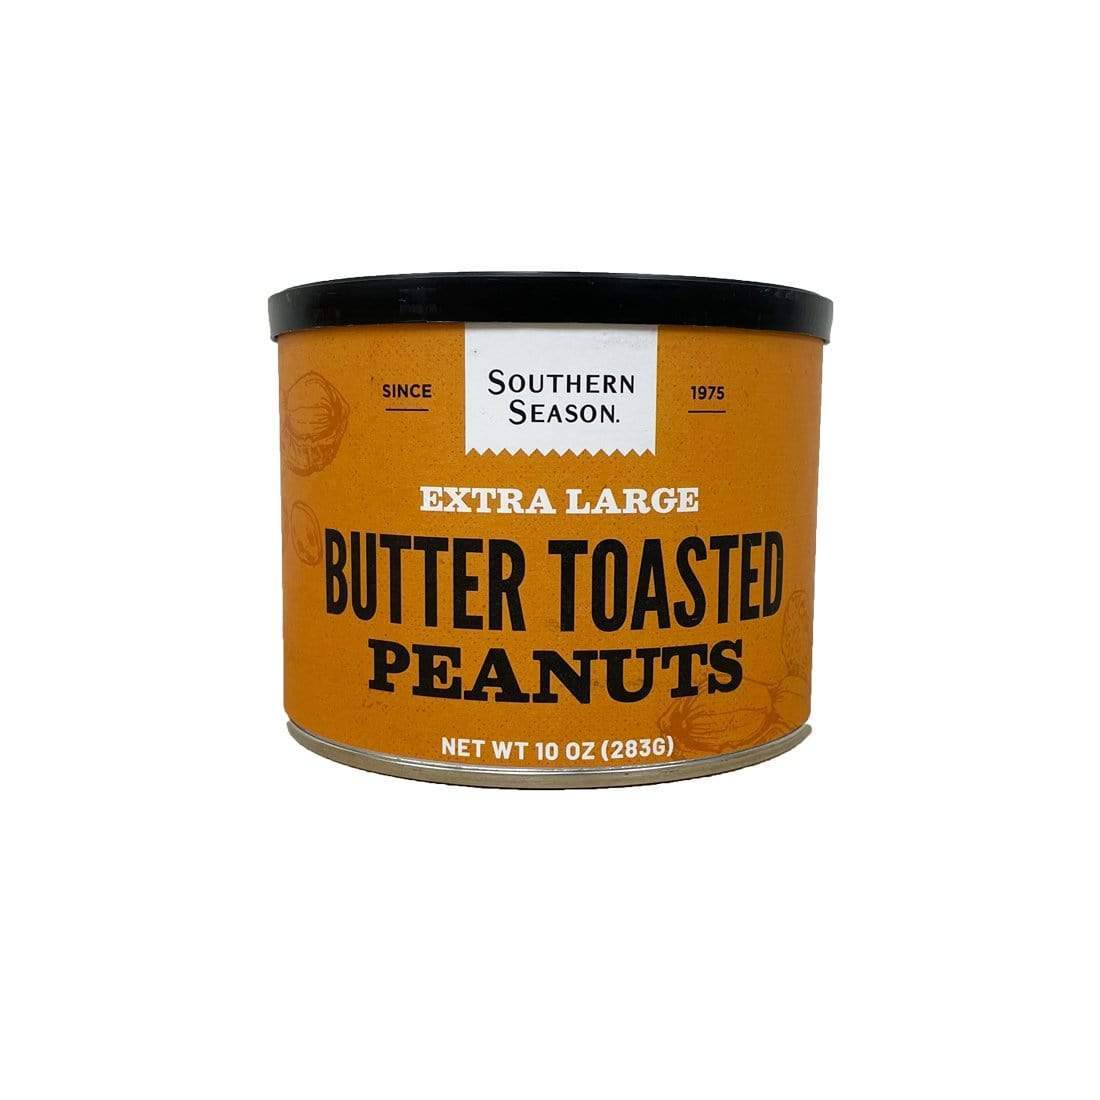 Southern Season Nuts Southern Season Butter Toasted Peanuts 10 oz